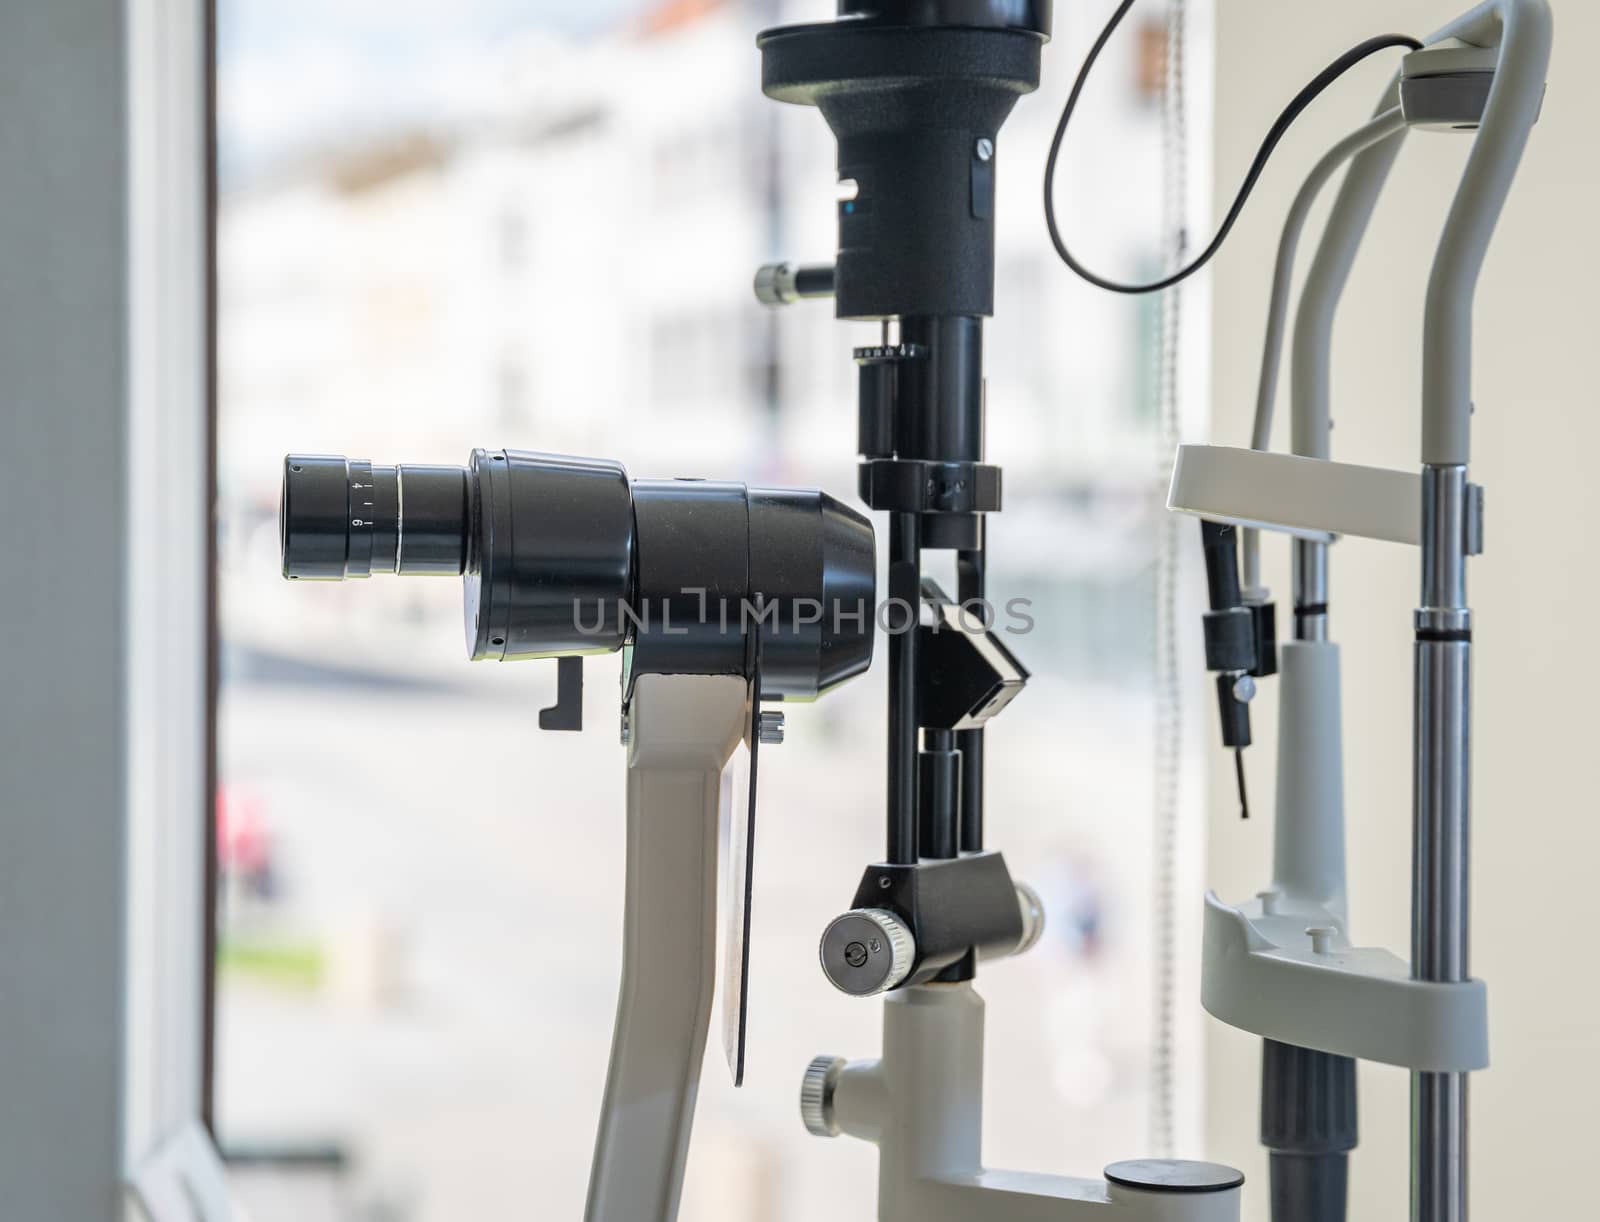 microscope for eye examination in hospital, optometrist by Edophoto